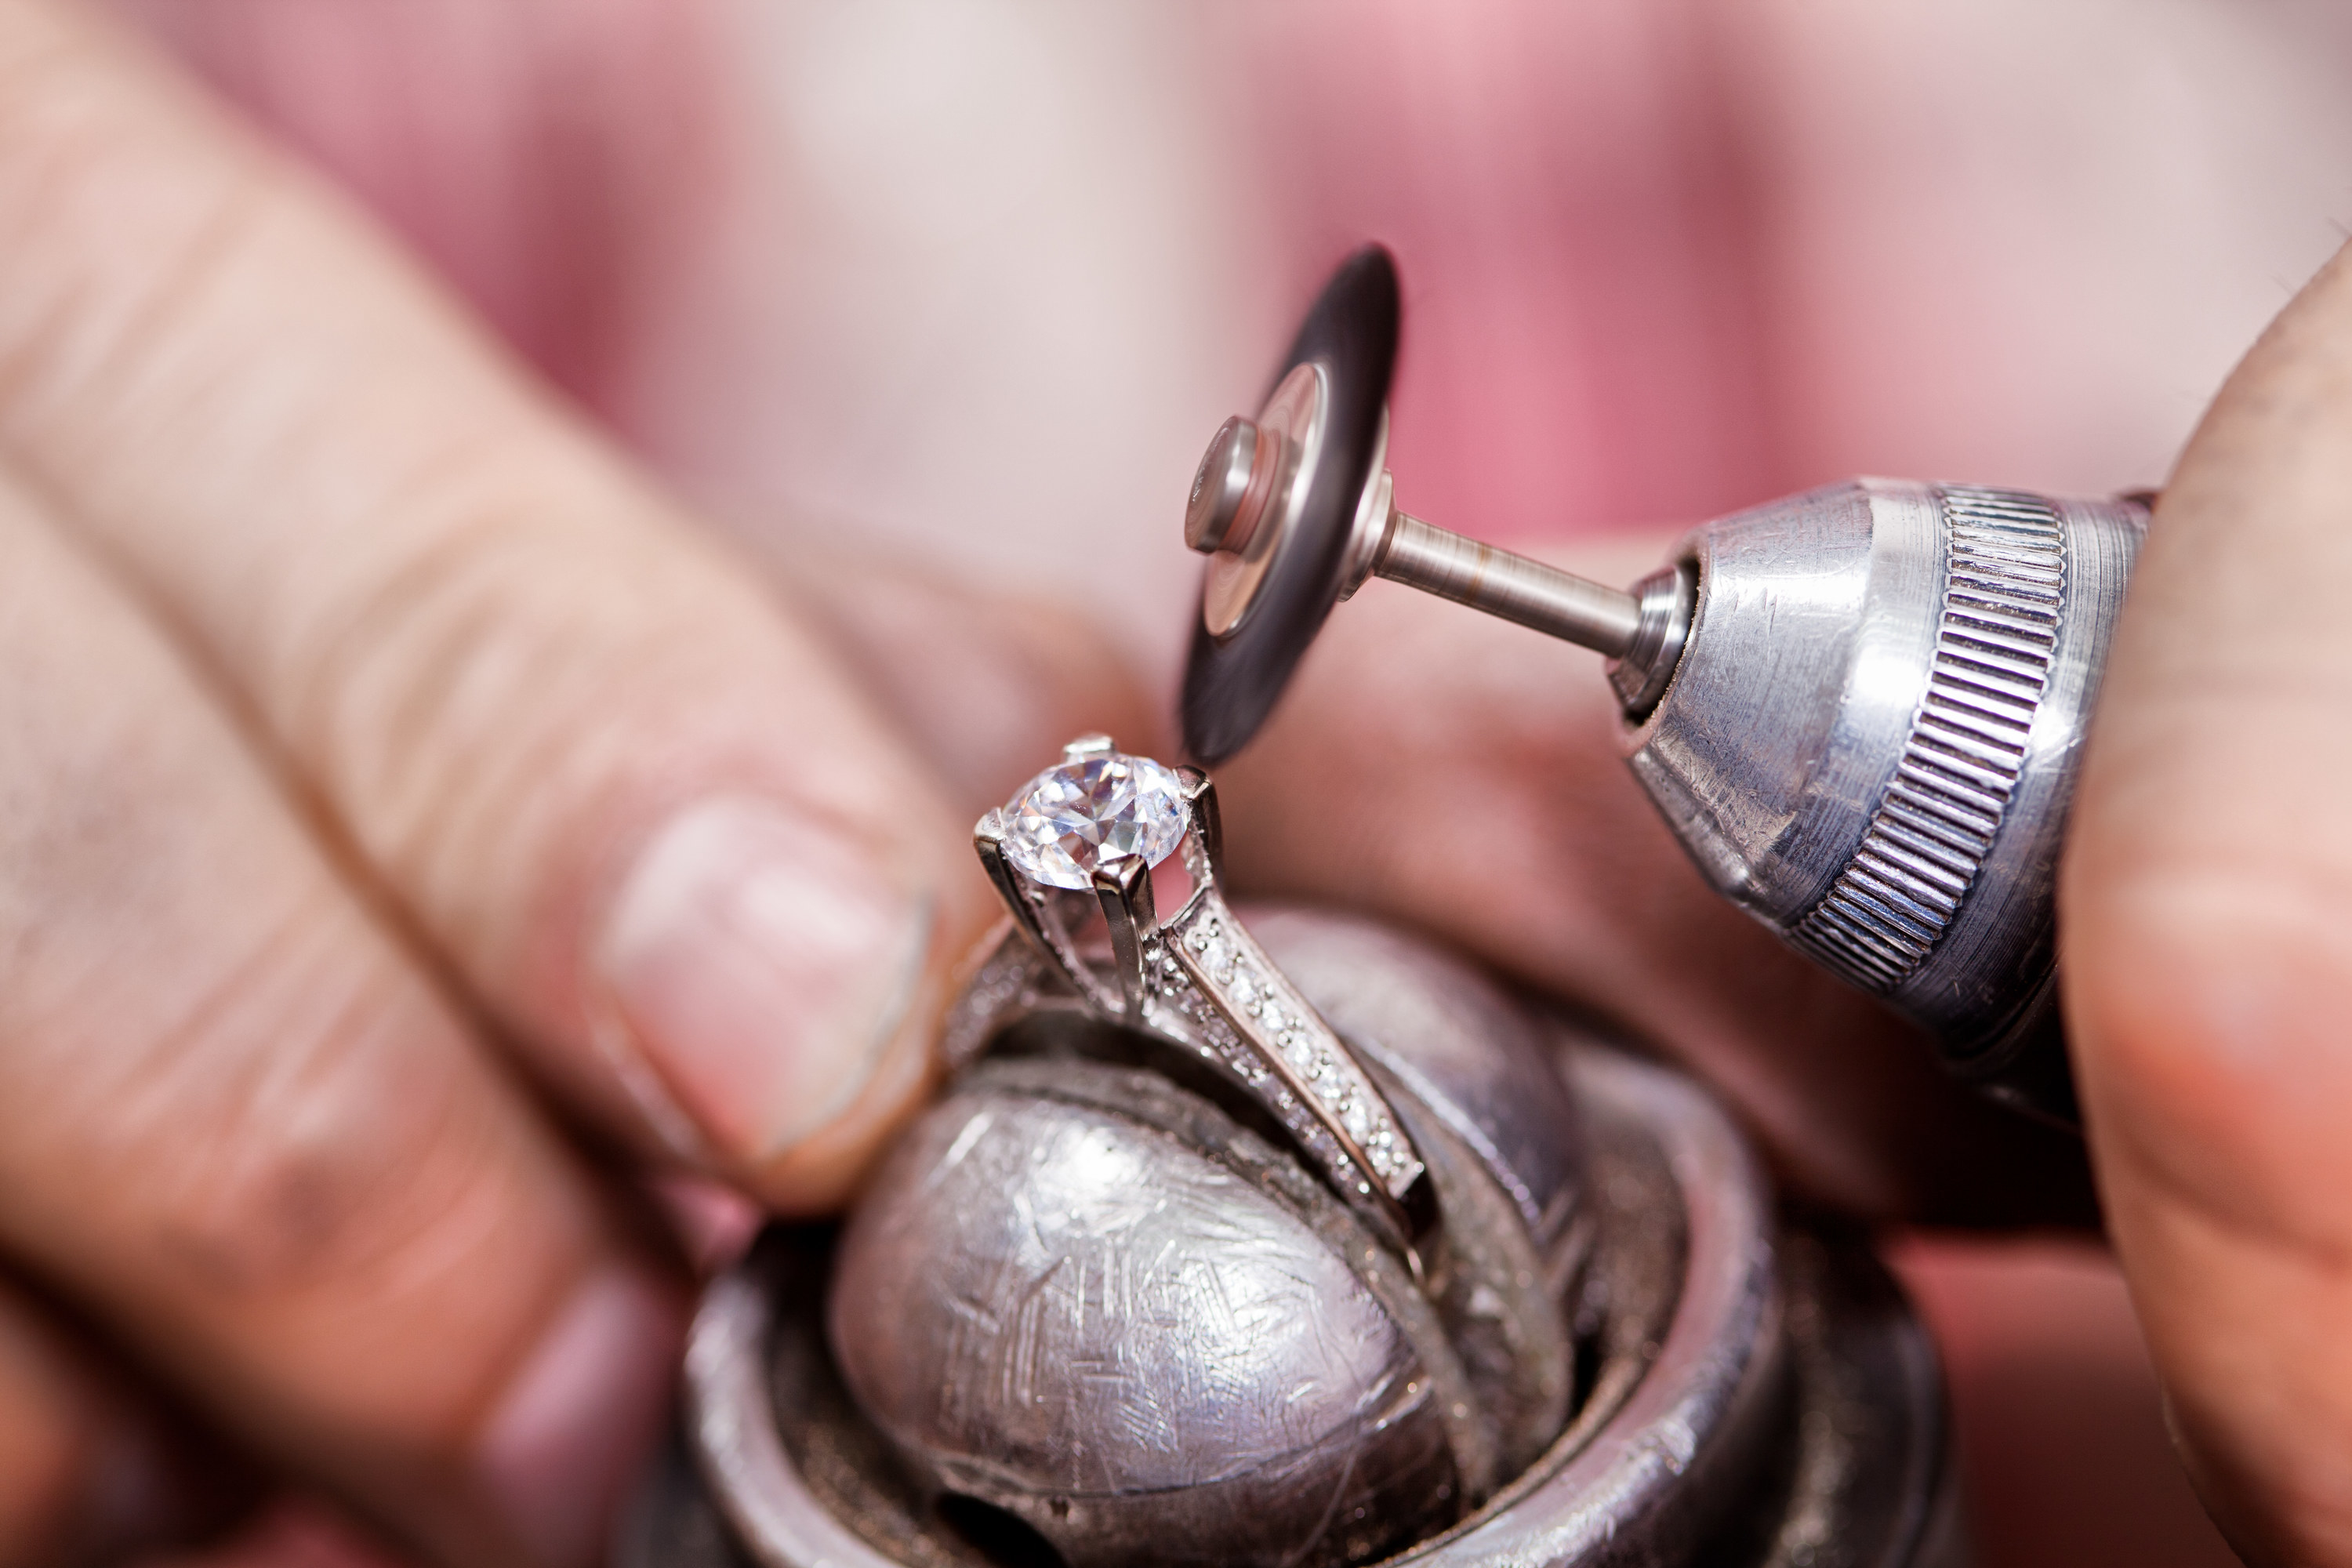 Jeweler polishing the diamond ring